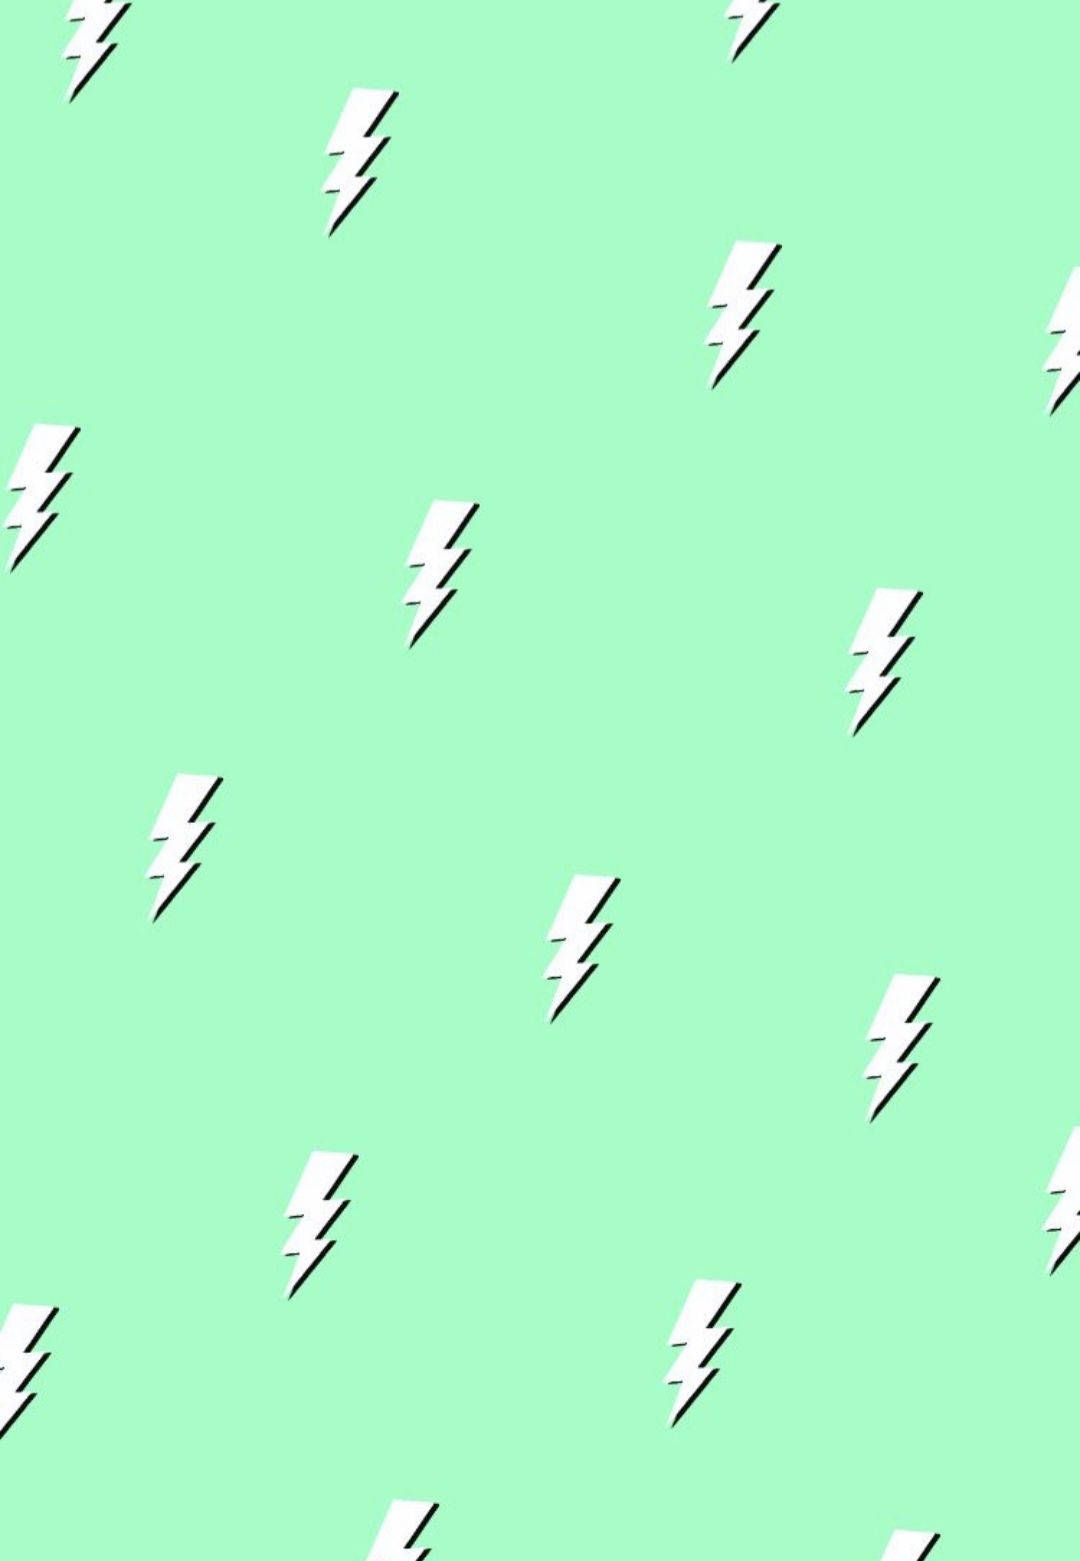 Lightning bolt pattern on a green background - Green, lime green, soft green, light green, lightning